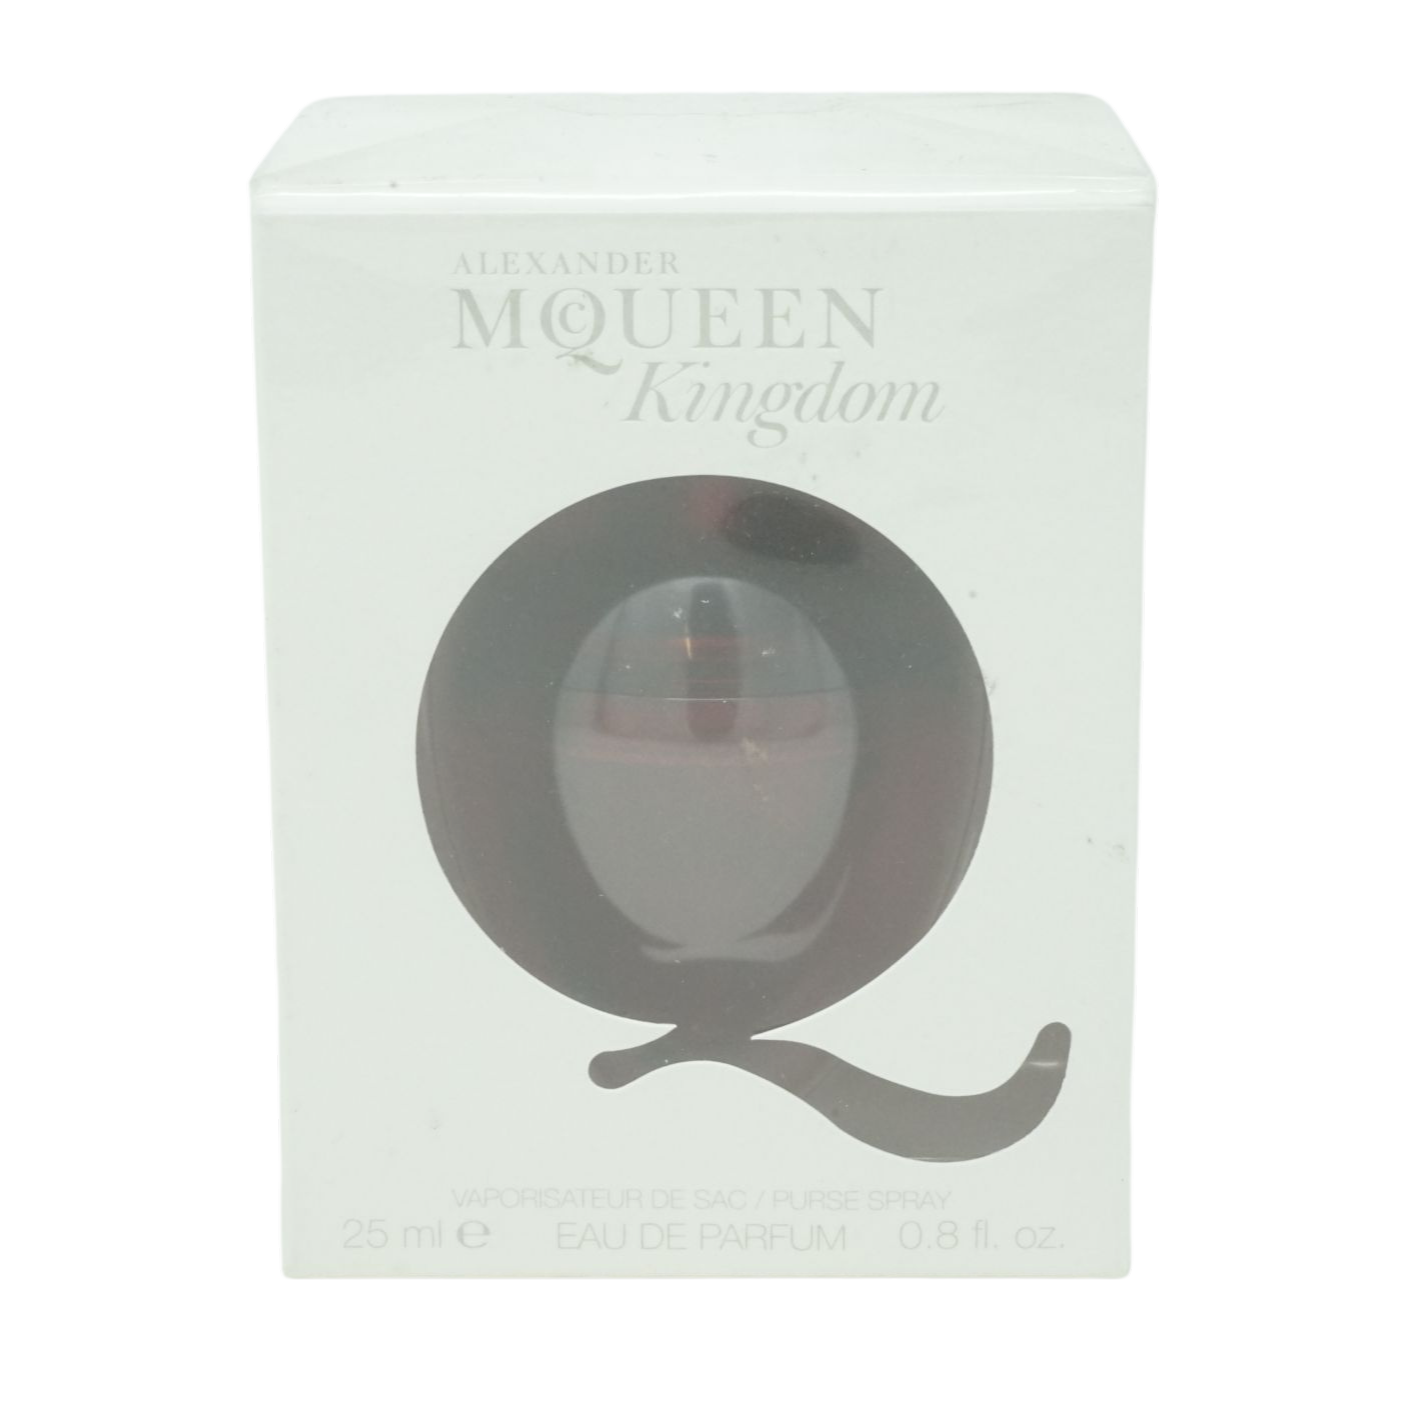 Alexander McQueen Kingdom Eau de Parfum 25ml